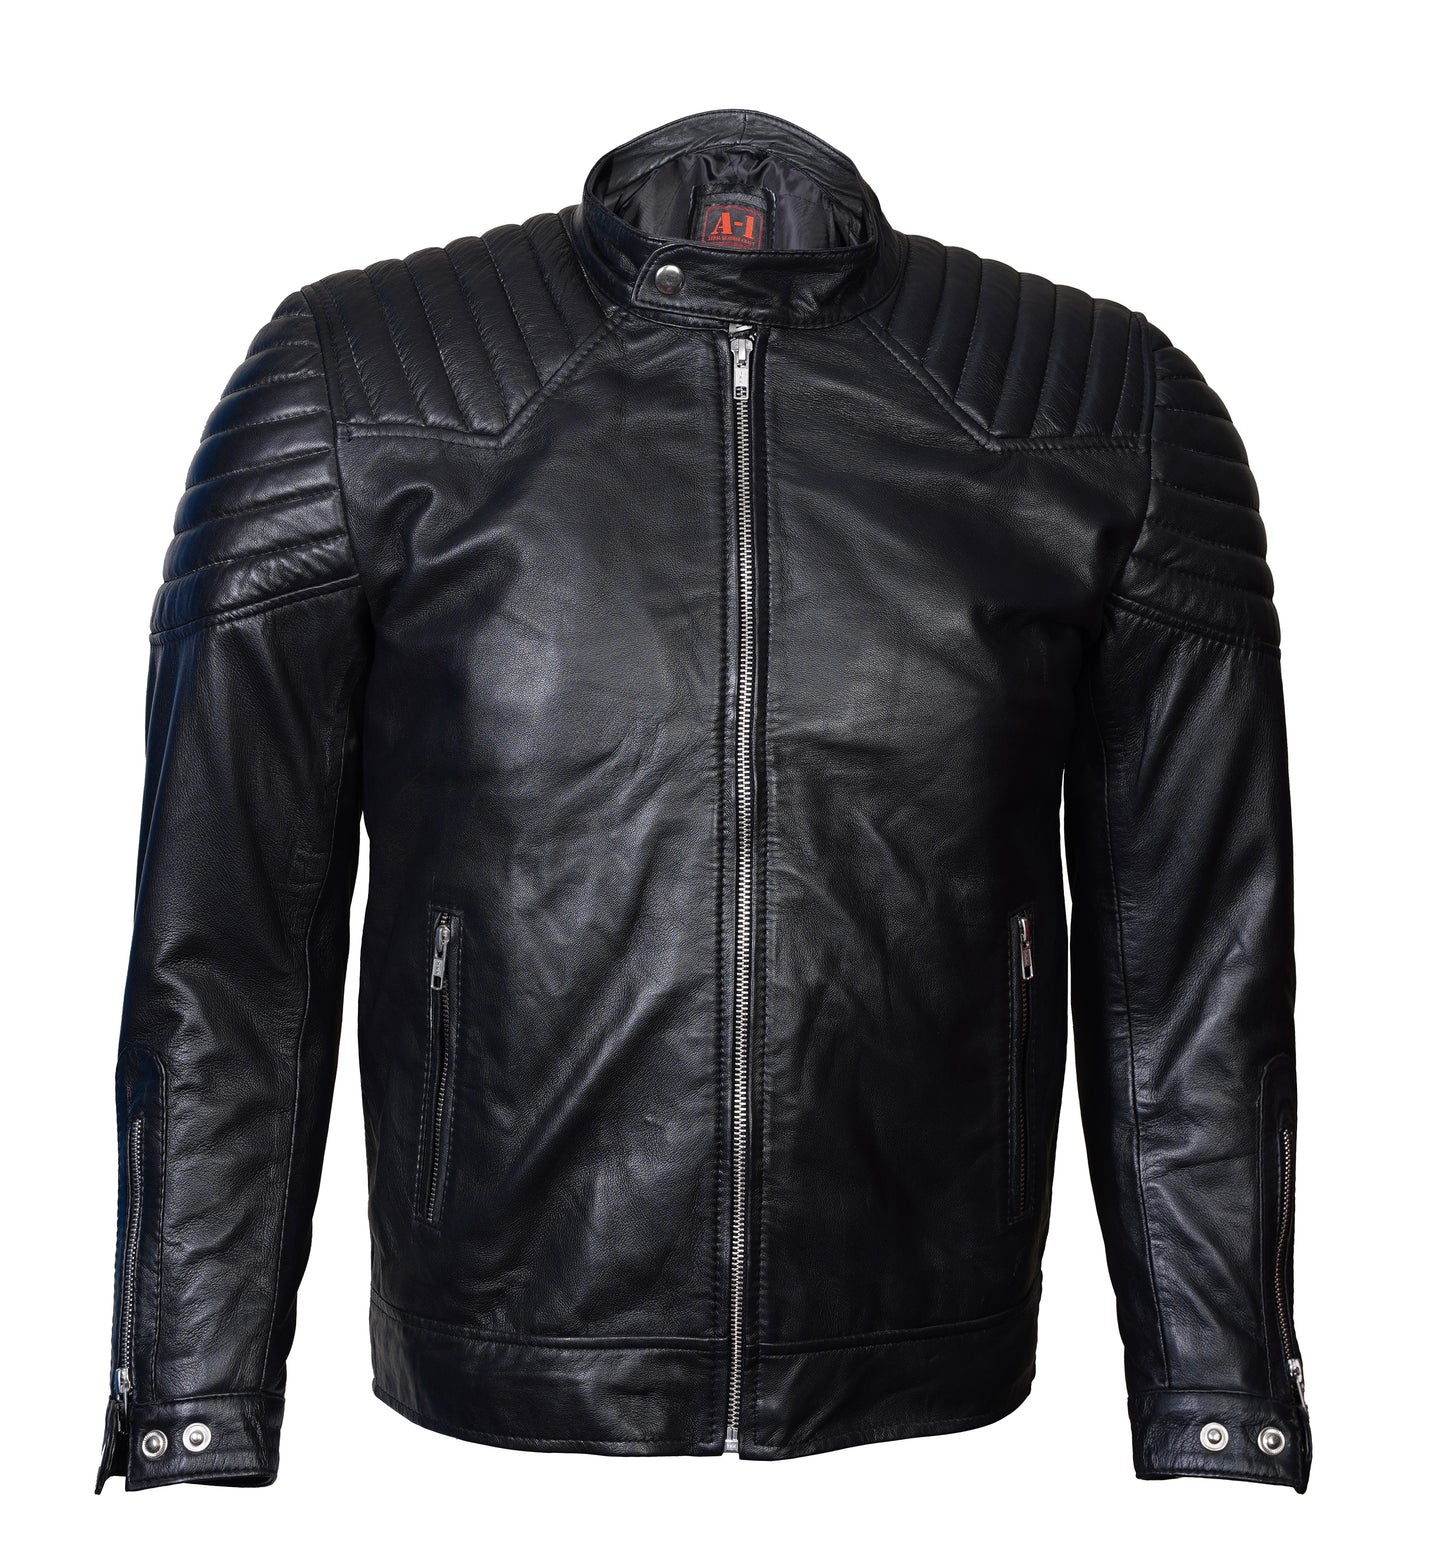 Buy Best Biker Fashion Leather Jacket